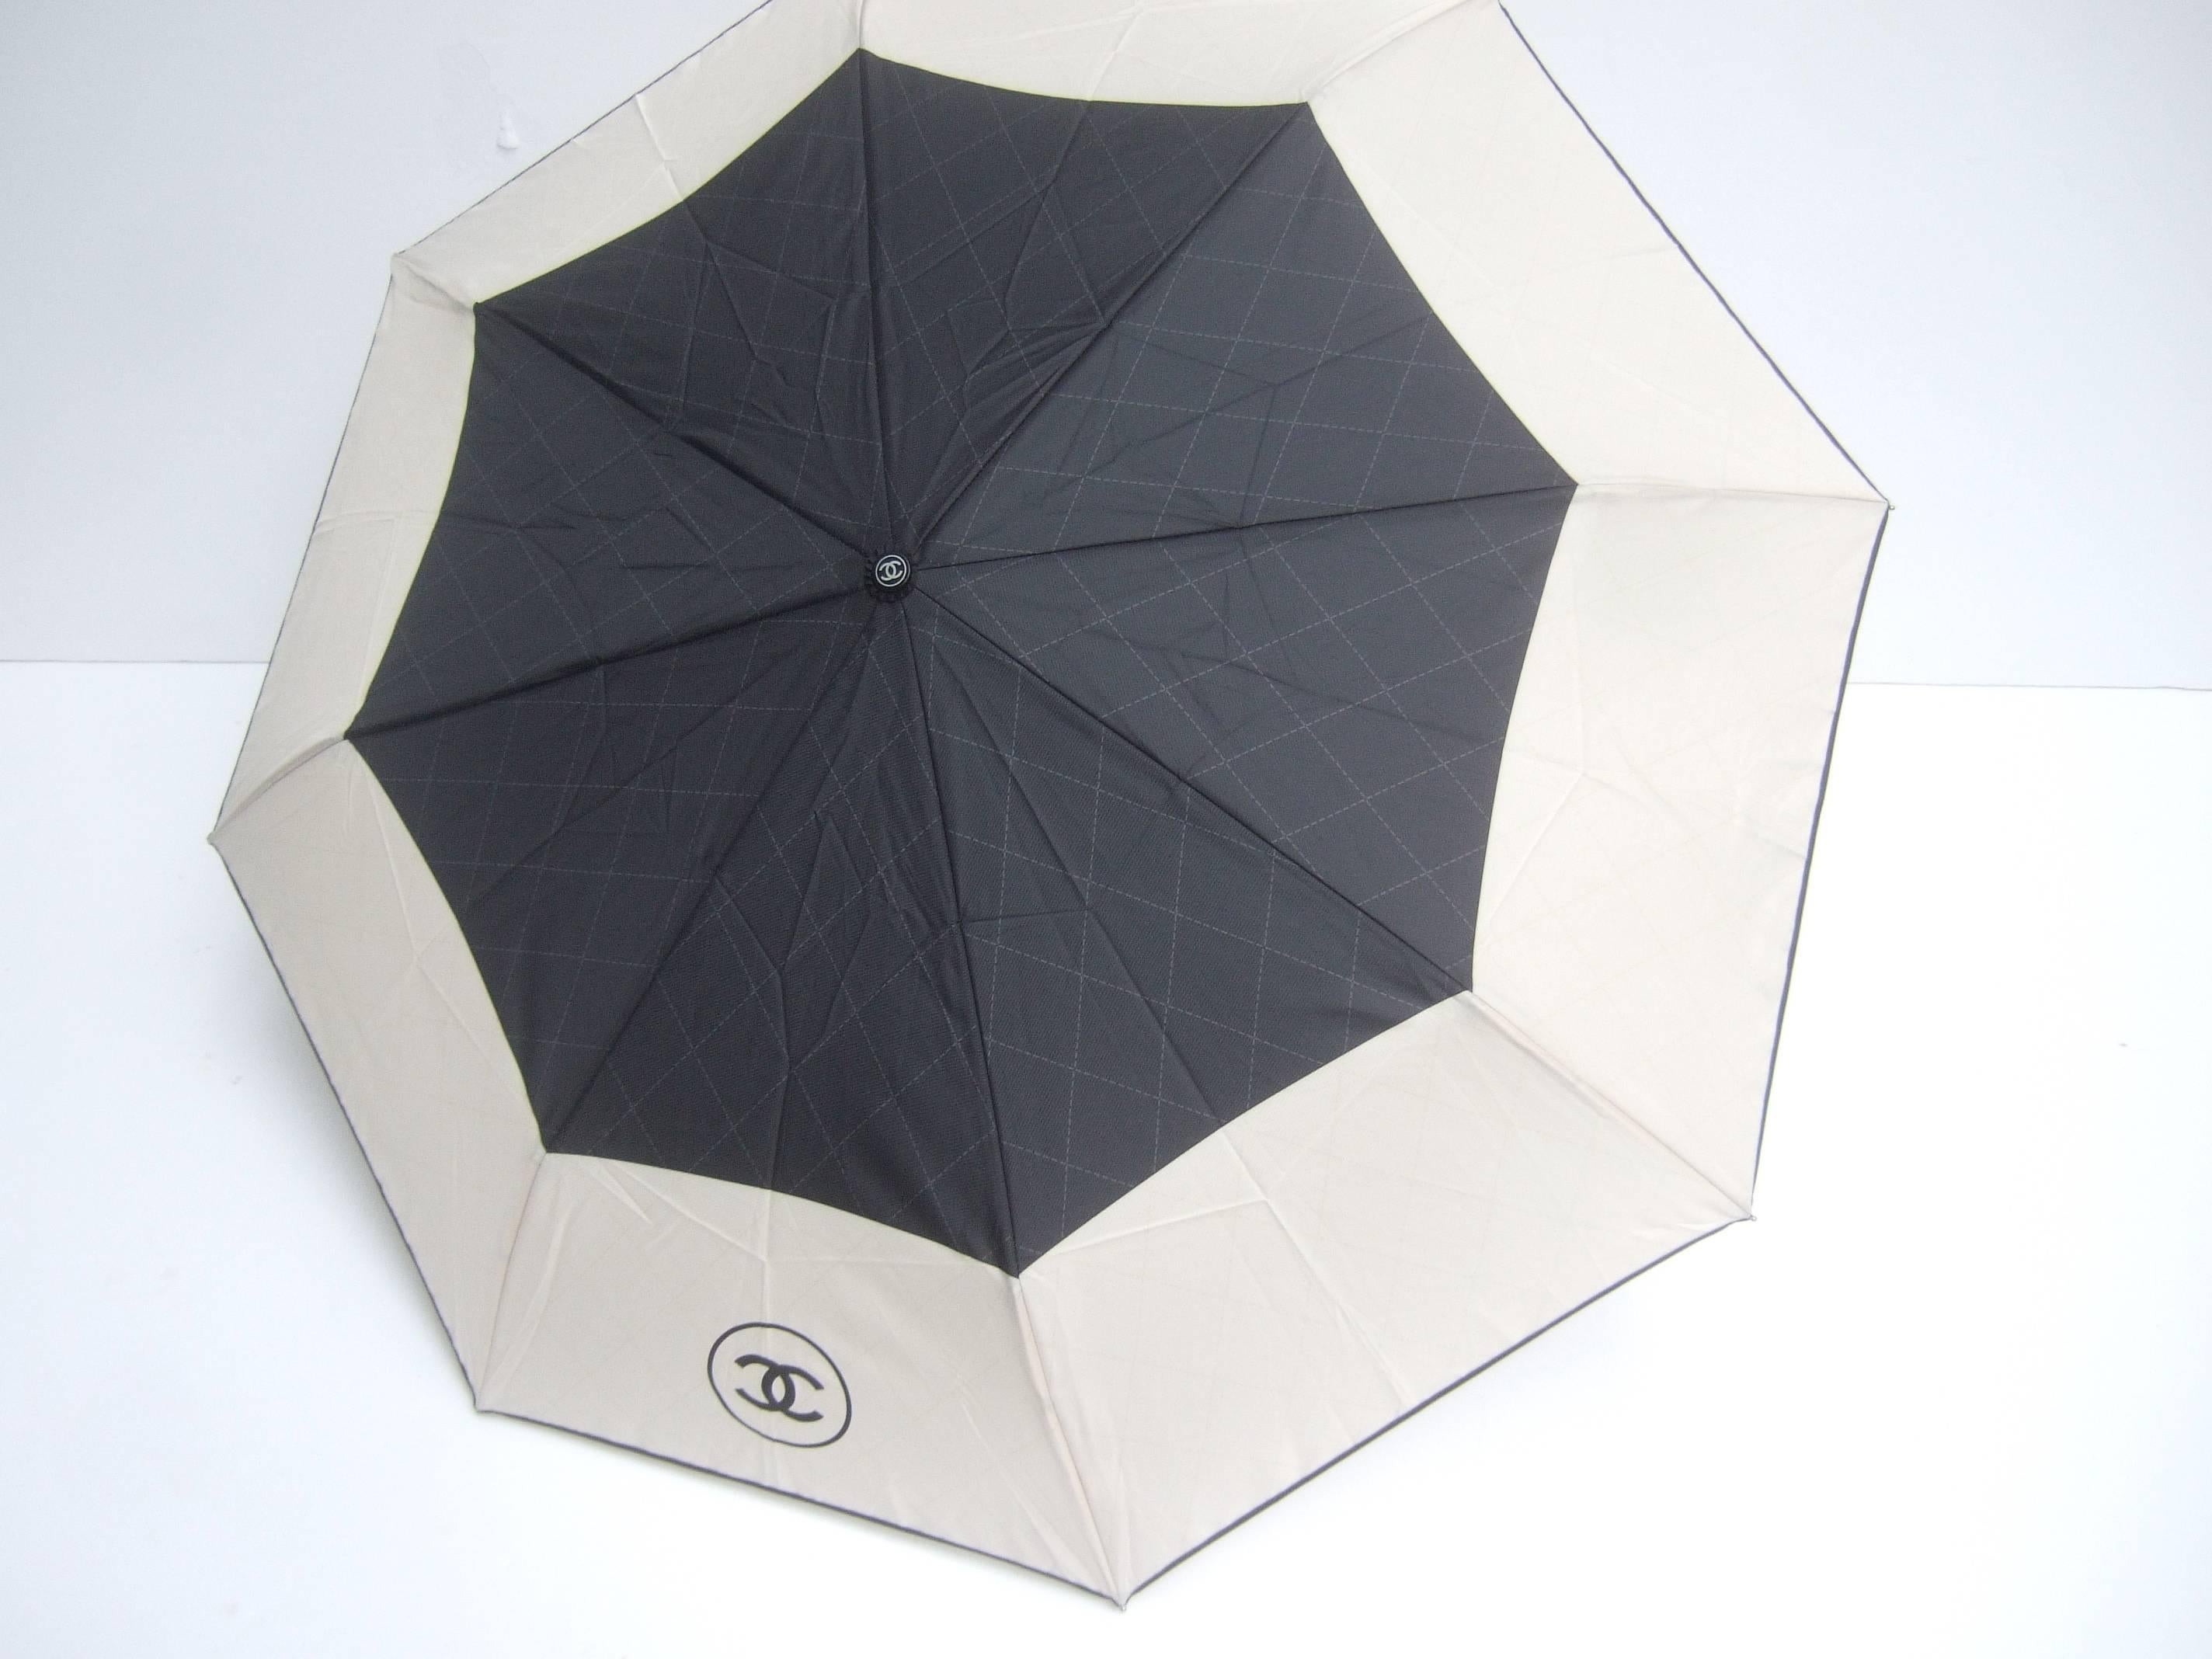 Chanel Stylish Black and Ivory Nylon Umbrella in Chanel Box 1